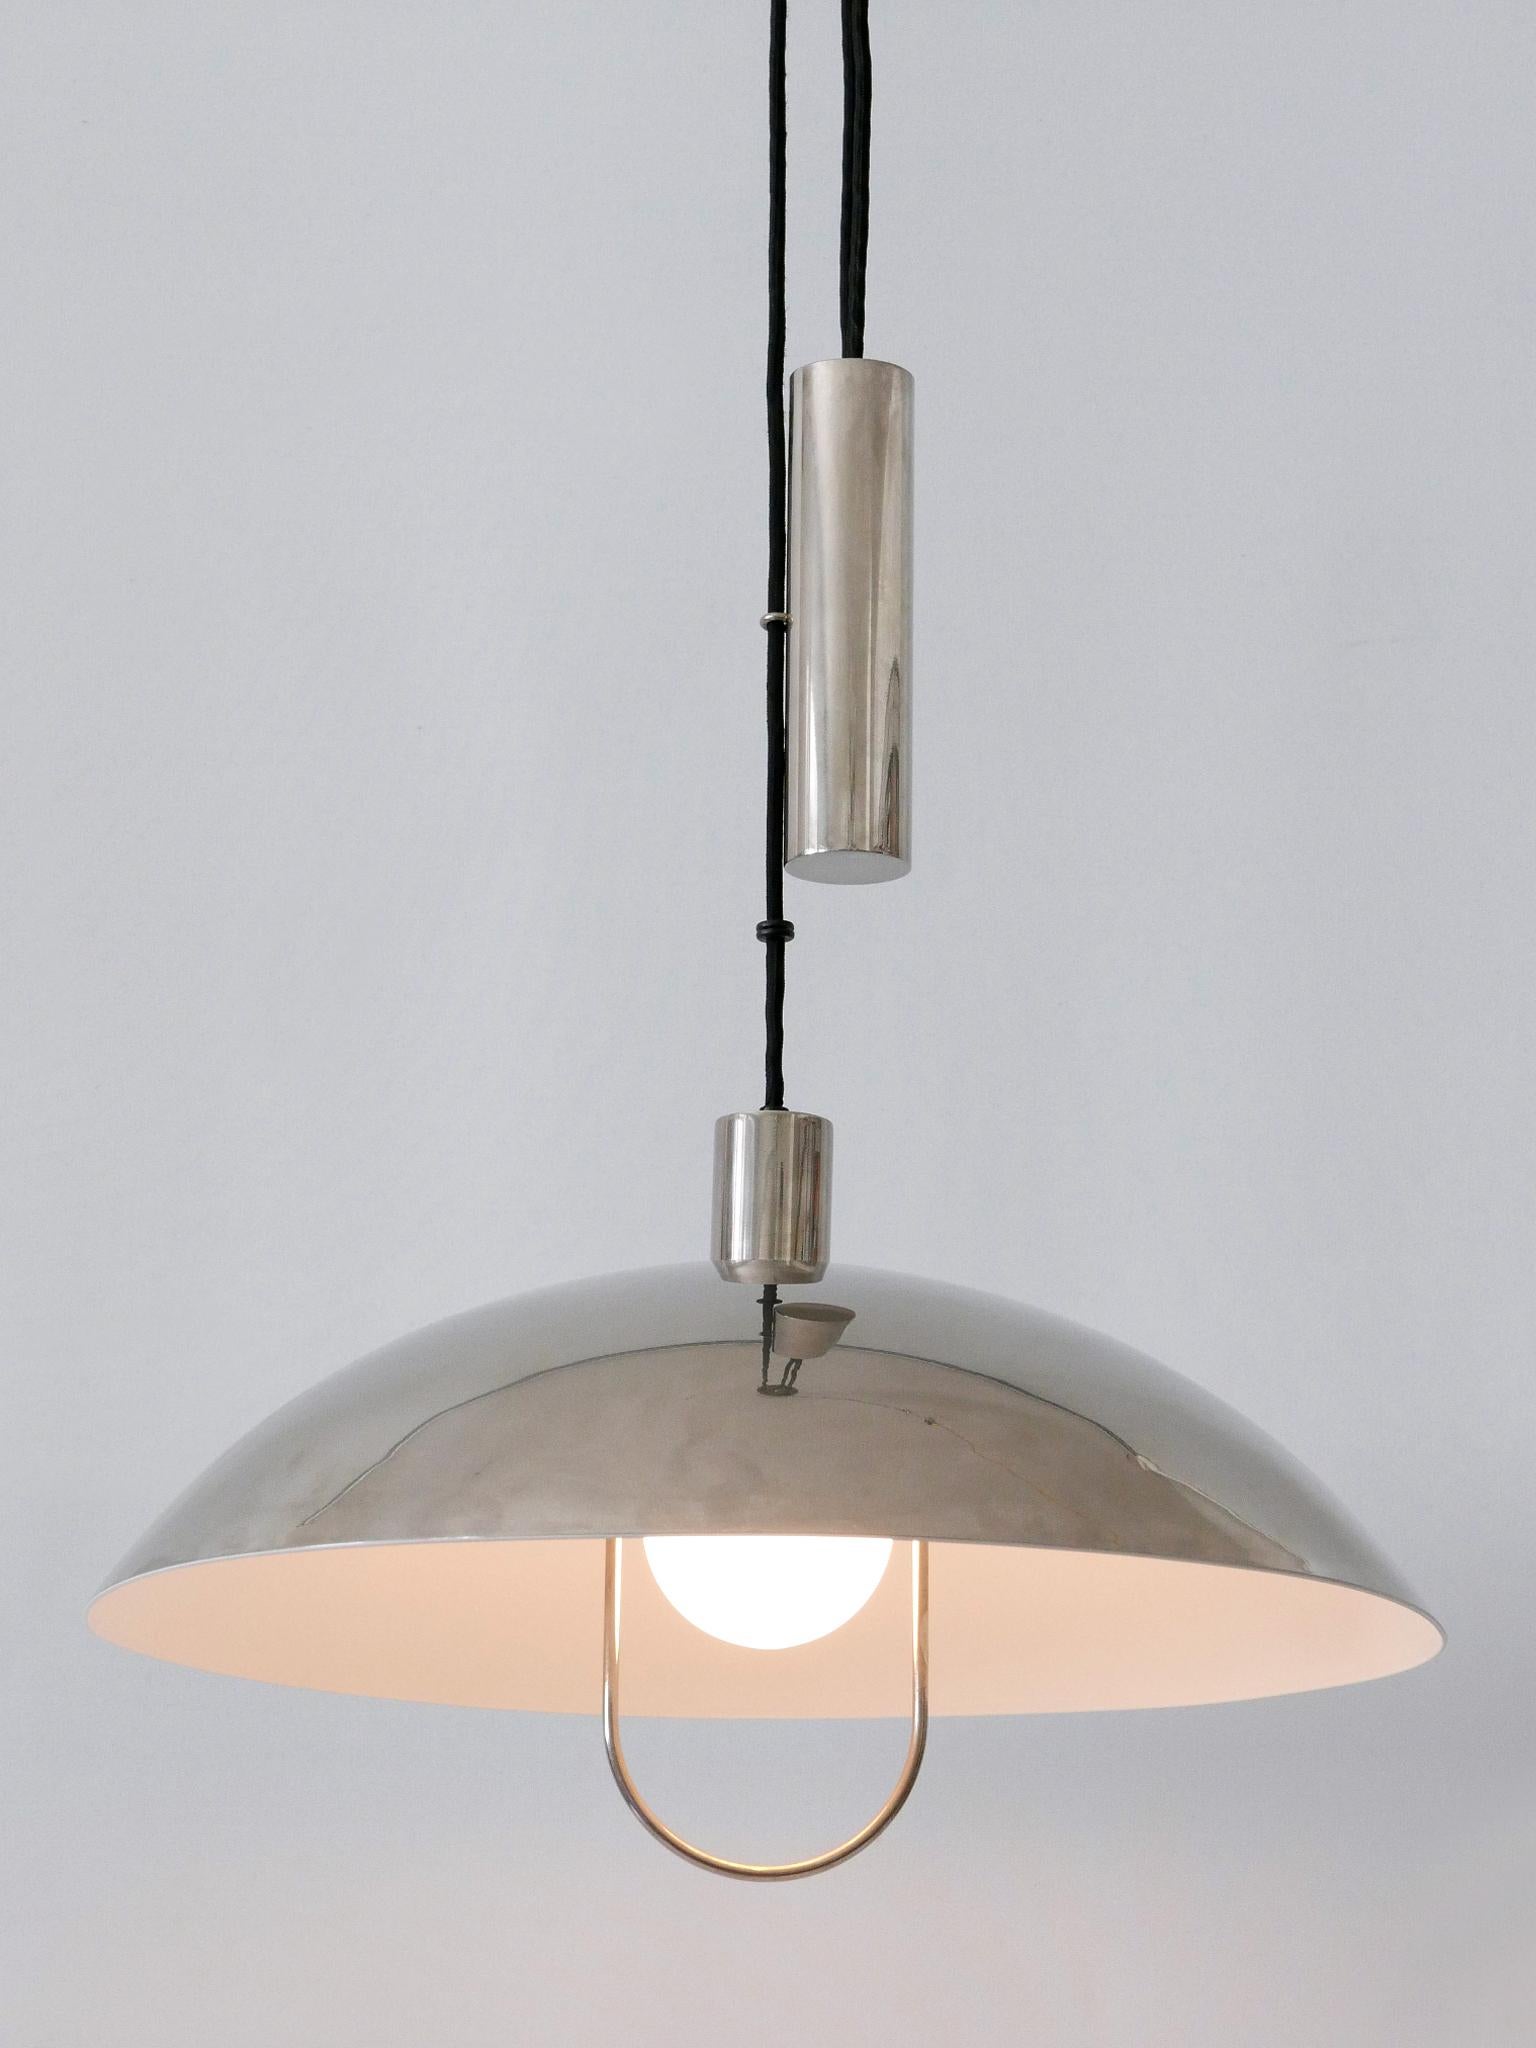 Early Tecnolumen Pendant Lamp 'Bauhaus HMB 25/500' by Marianne Brandt 1980s For Sale 8